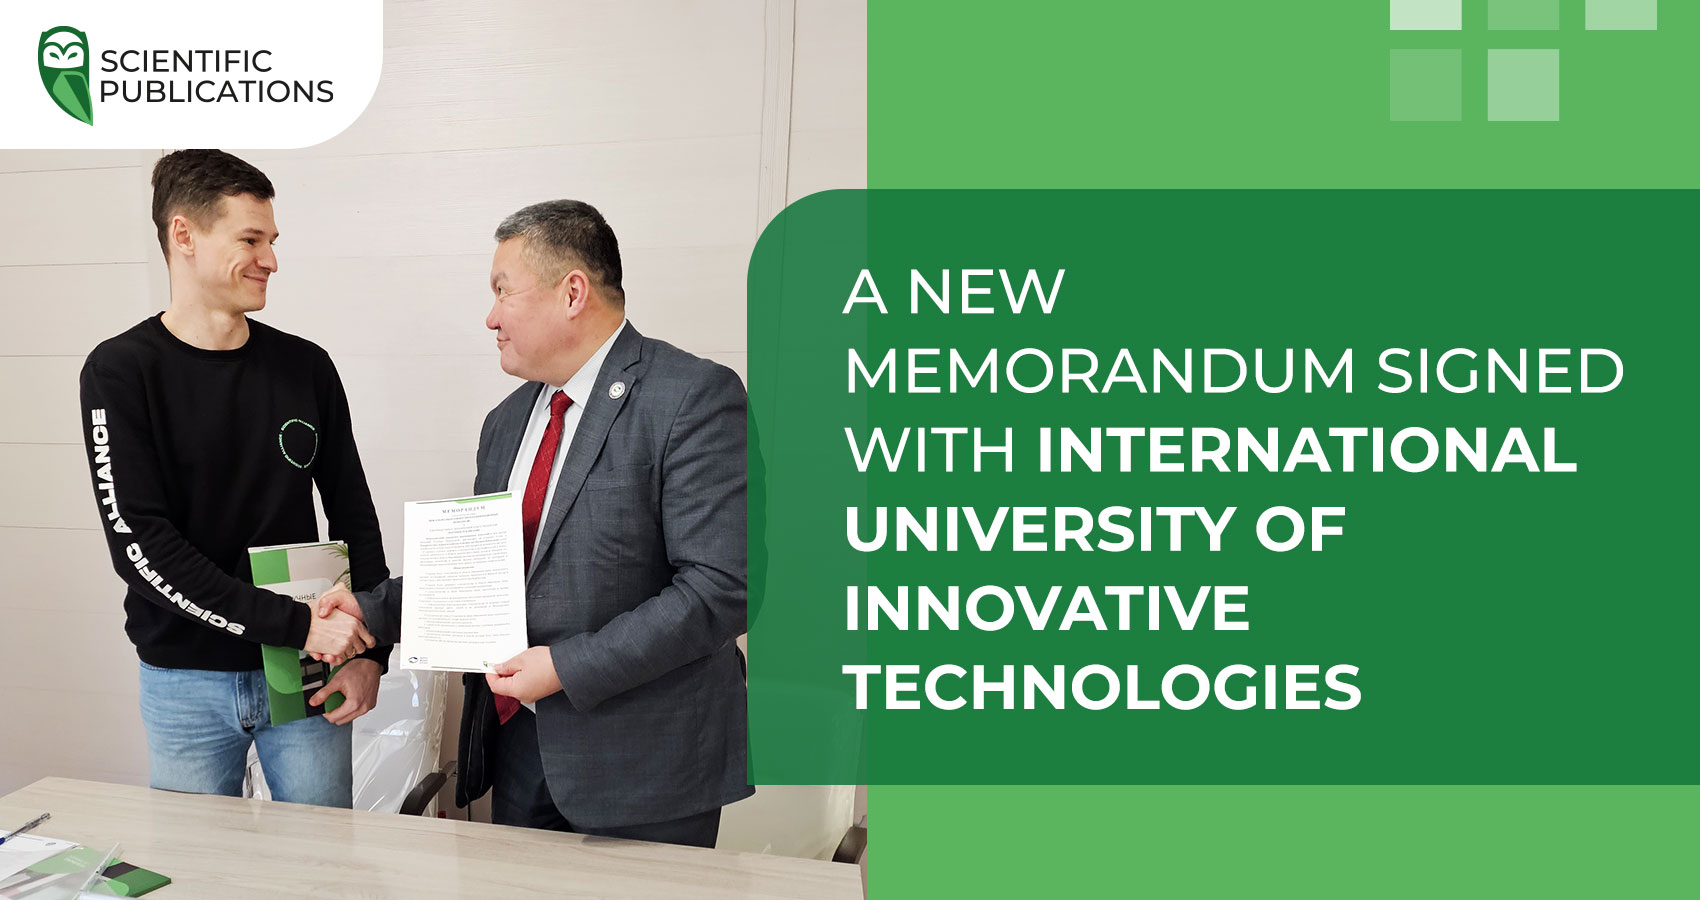 A memorandum has been signed with the International University of Innovative Technologies